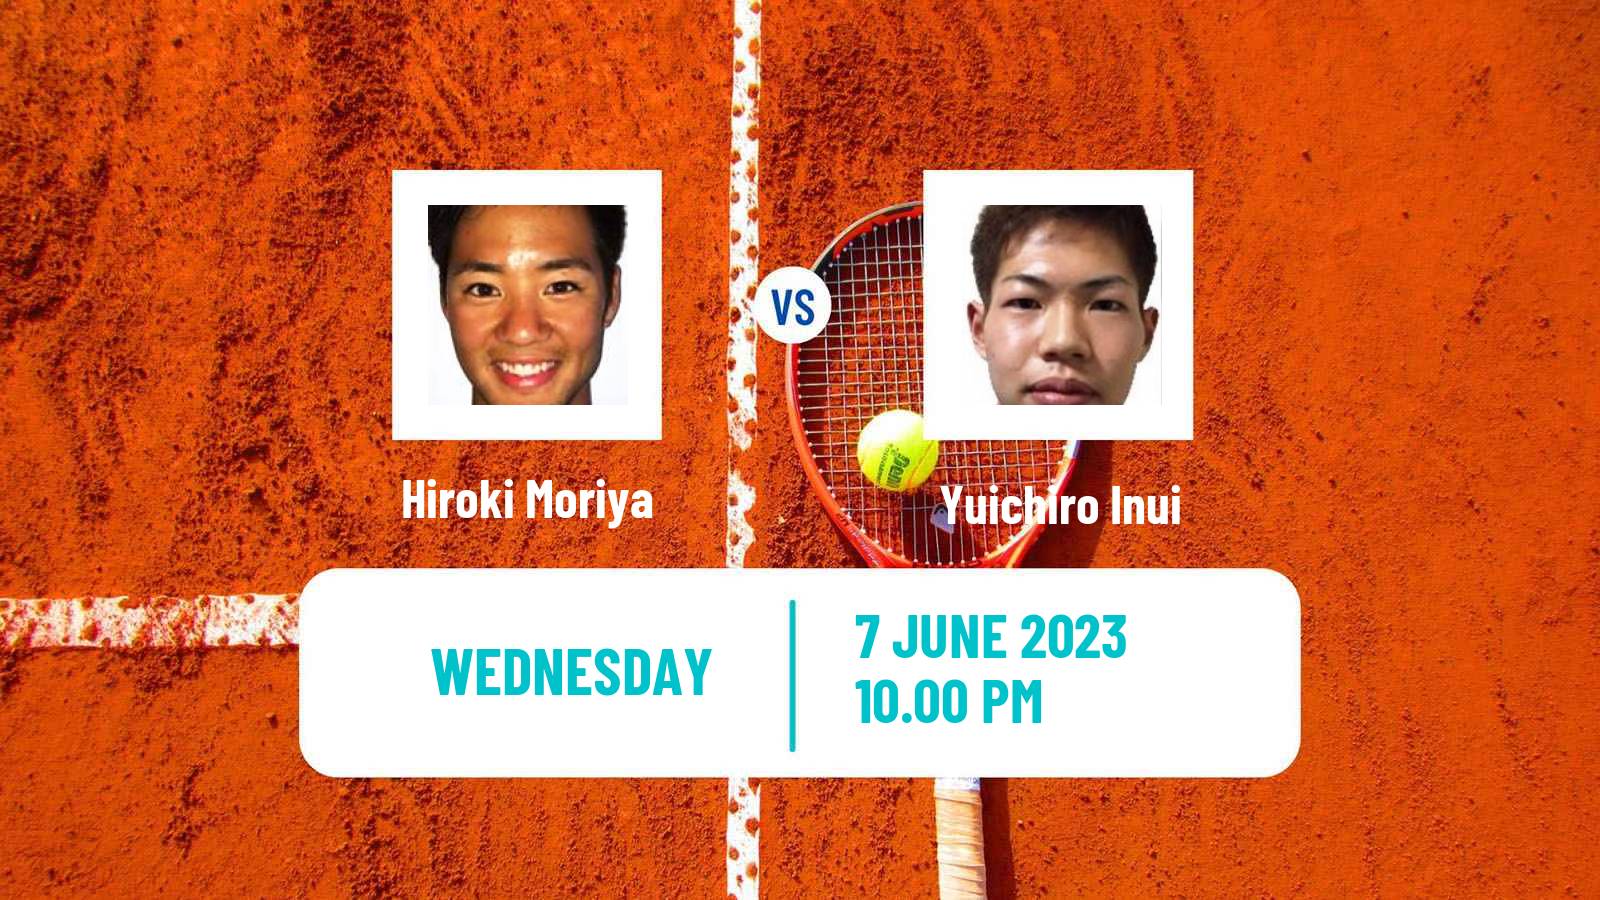 Tennis ITF M25 Jakarta 5 Men Hiroki Moriya - Yuichiro Inui